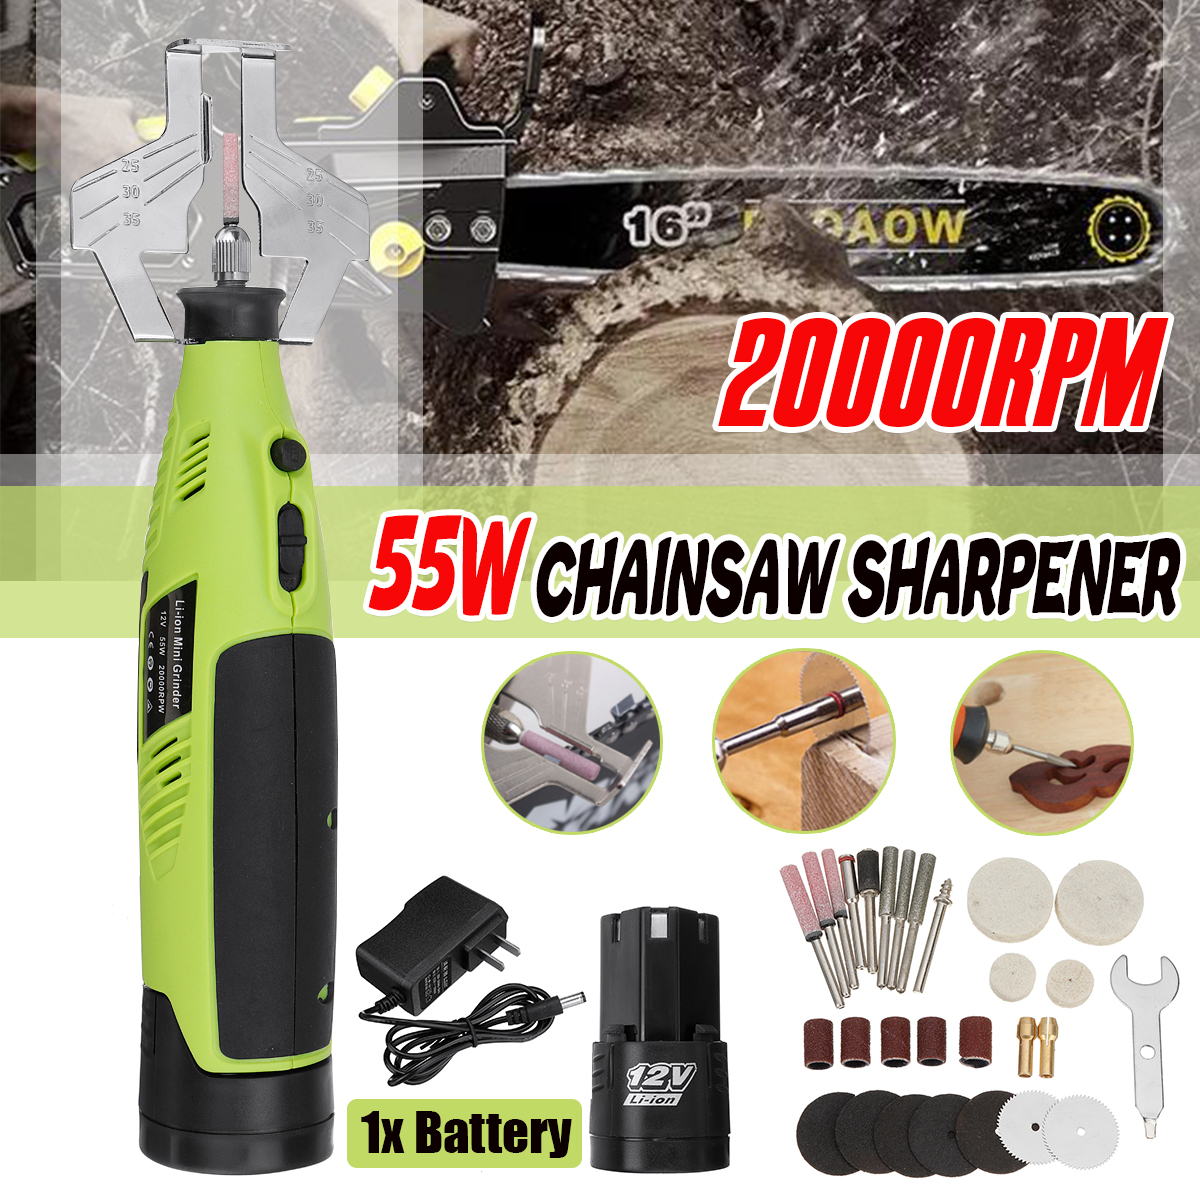 55W-20000rpm-Power-Grinder-Chain-Saw-Sharpener-Handheld-Electric-Chain-Machine-W-1-or-2pcs-Battery-1816032-1